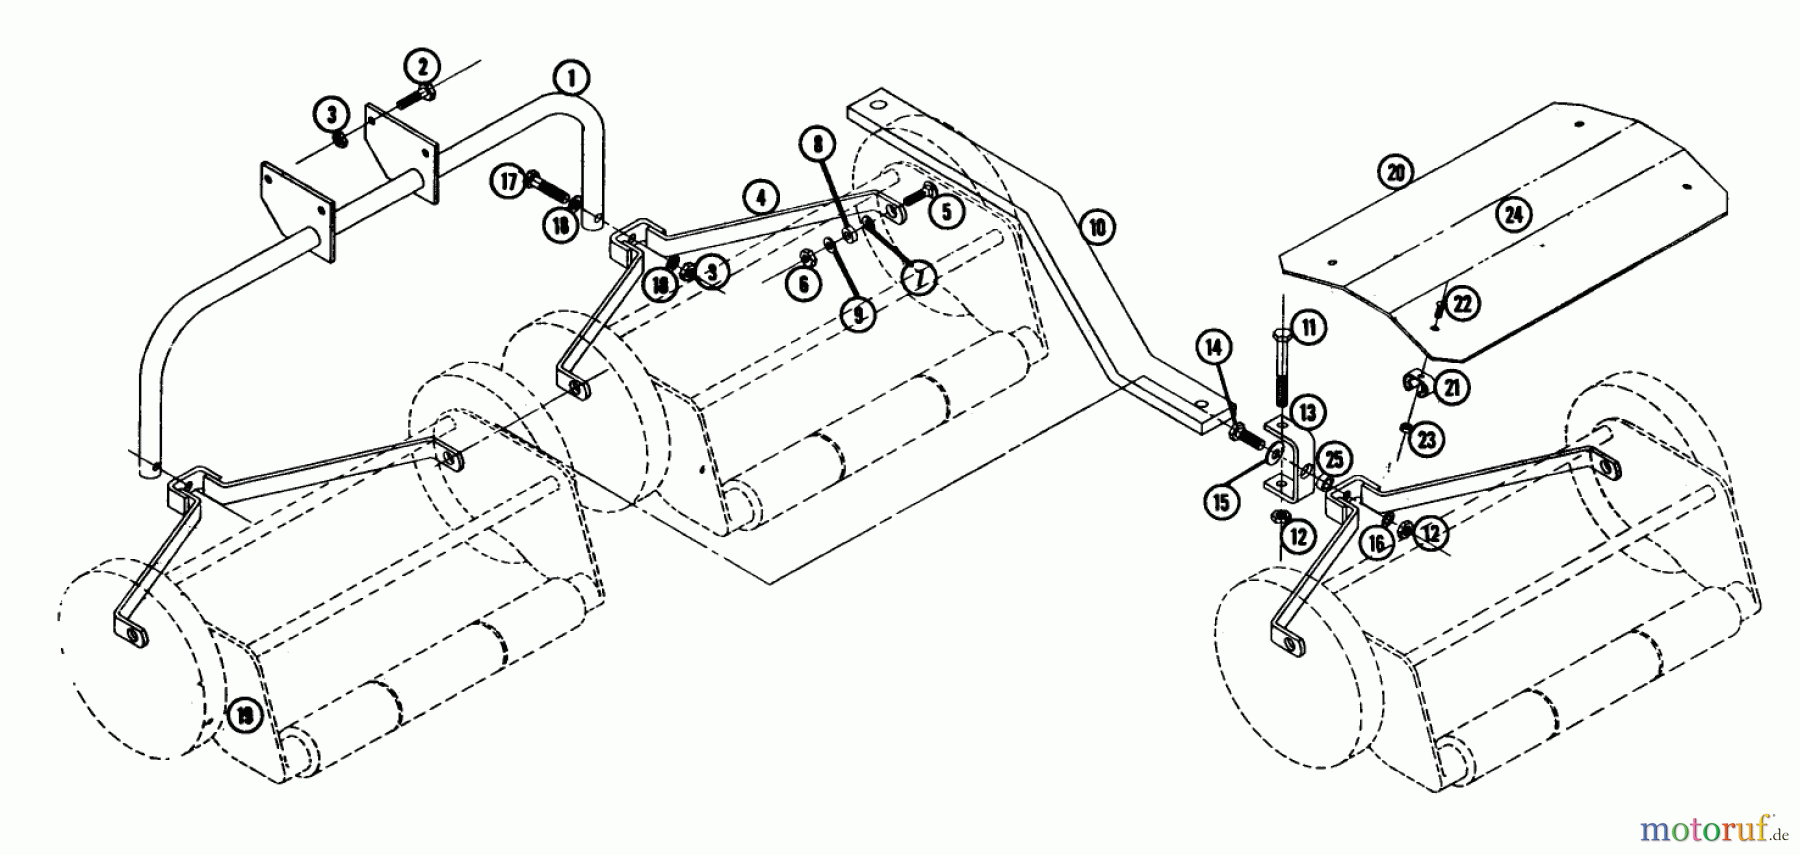  Toro Neu Mowers, Deck Assembly Only SGM-603 - Toro 3 Gang Reel Mower, 1964 GANG MOWER PARTS LIST